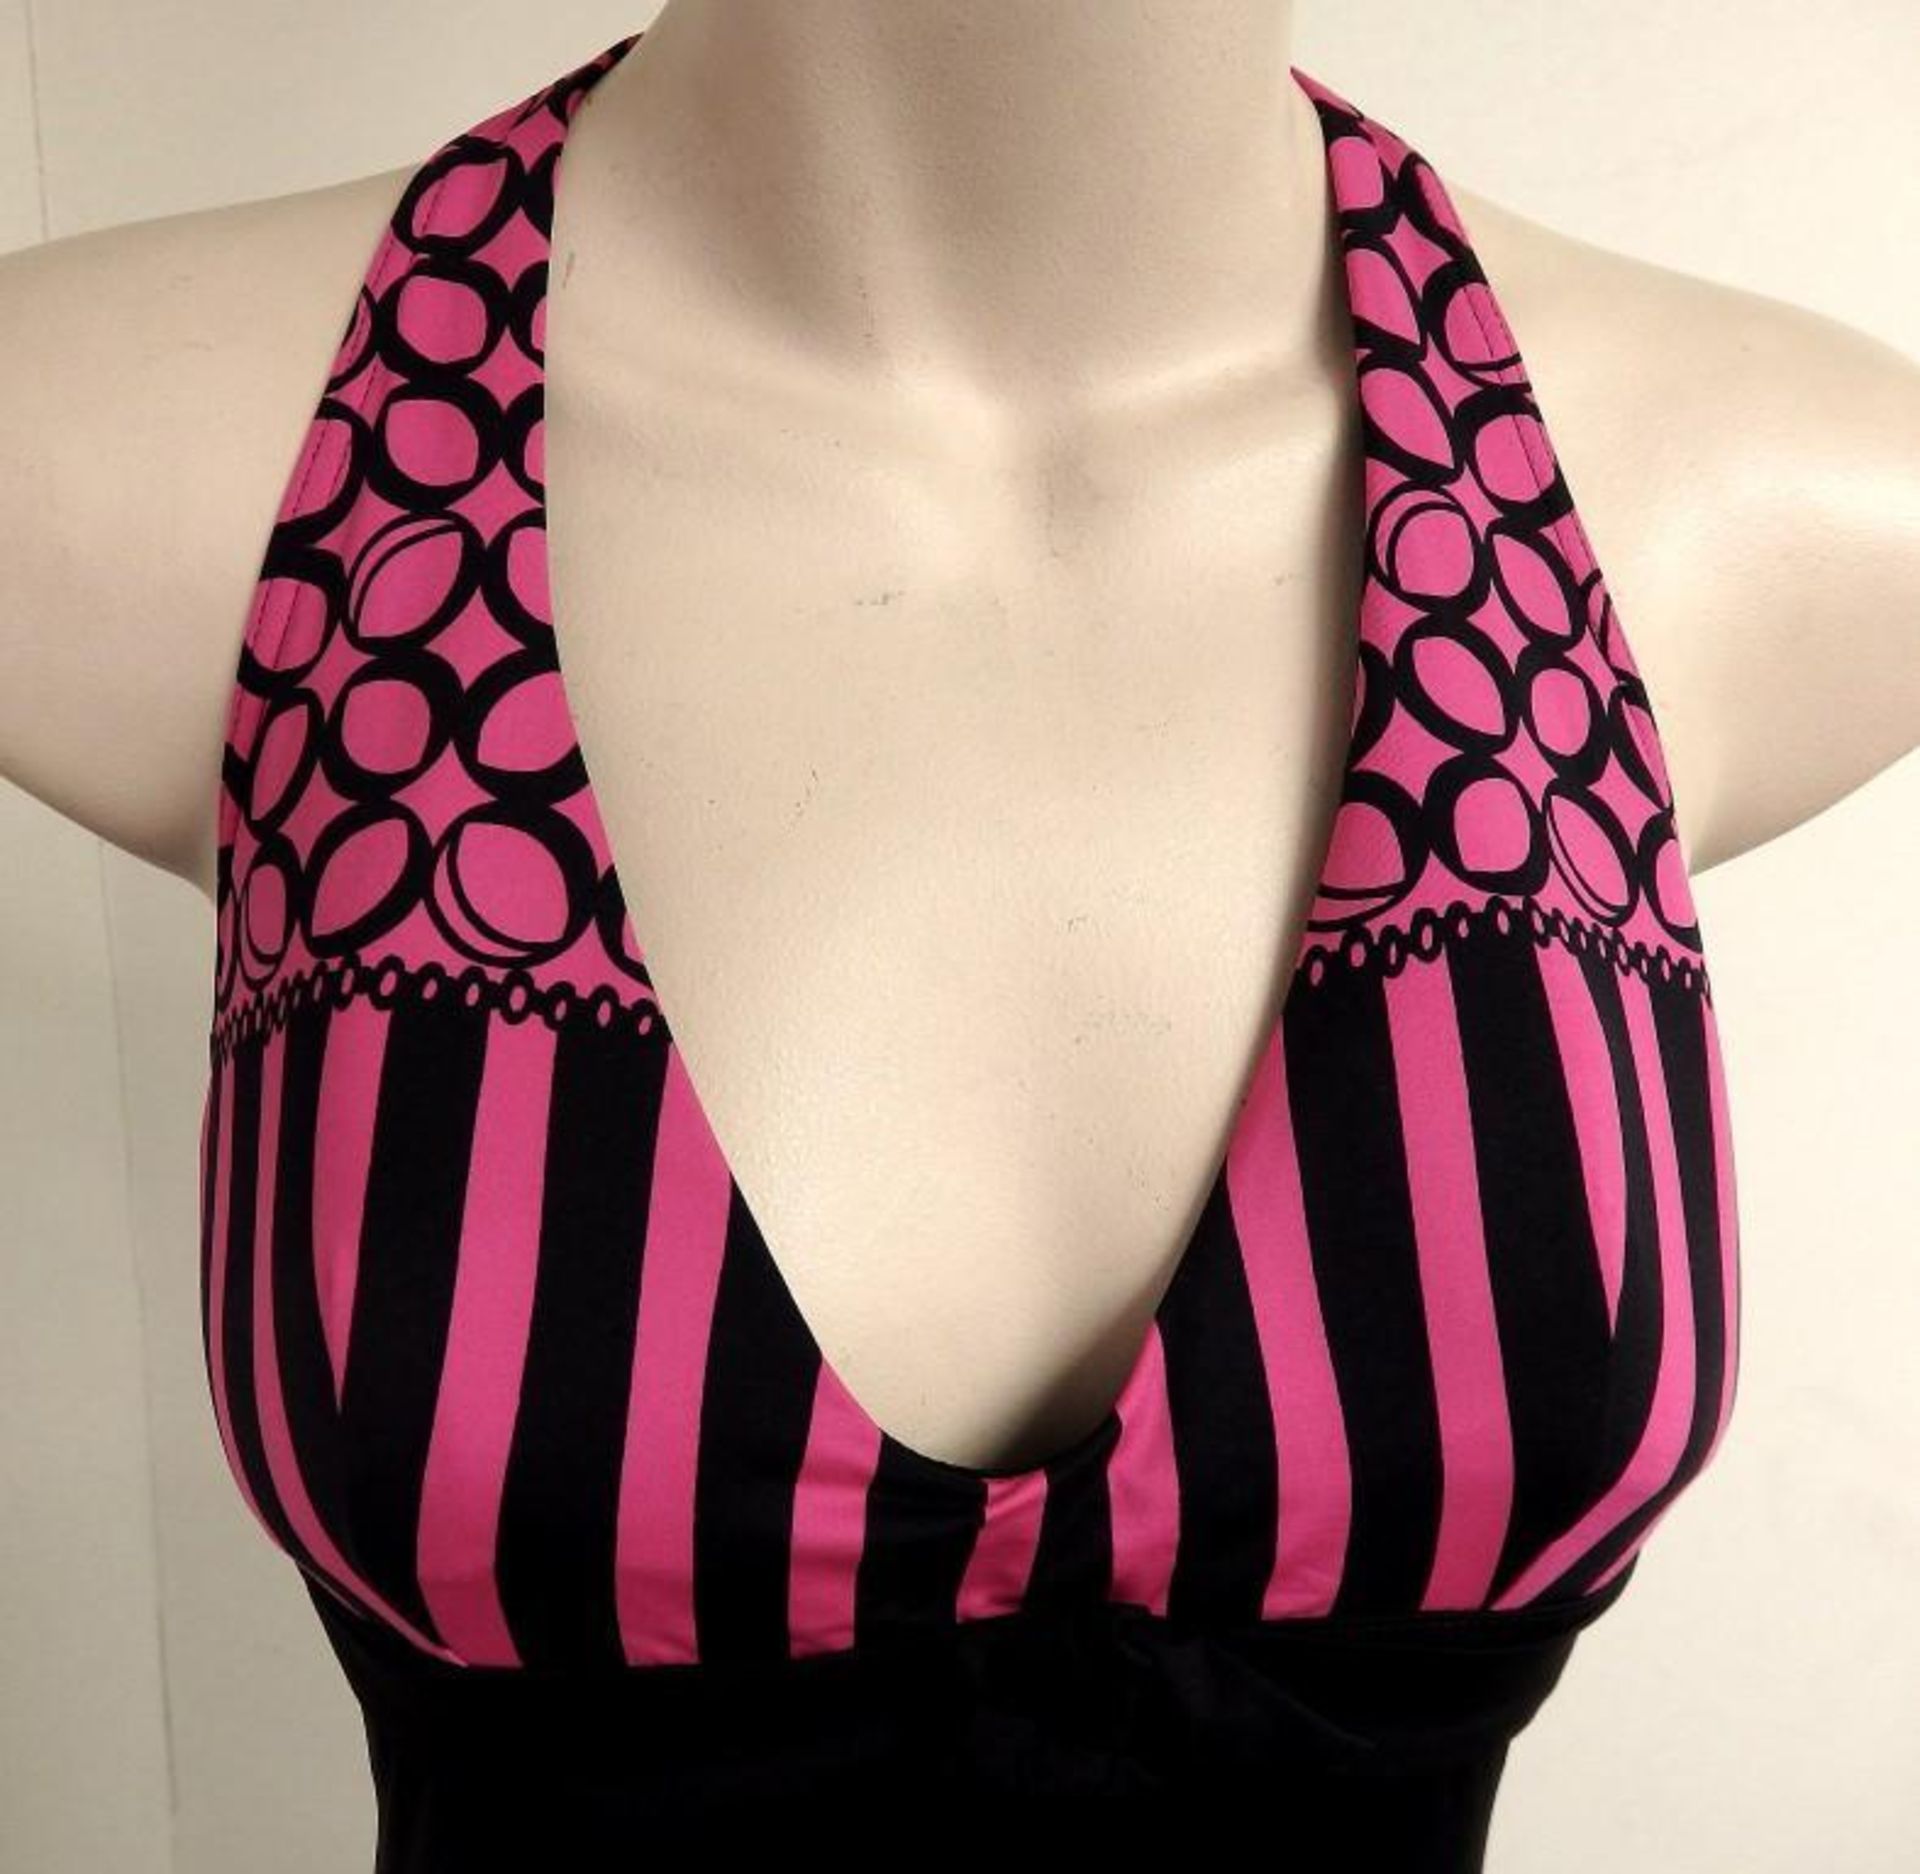 1 x Rasurel - Black/Pink patterned - Borneo Swimsuit - R20434 - Size 2C - UK 32 - Fr 85 - EU/Int 70 - Image 7 of 7